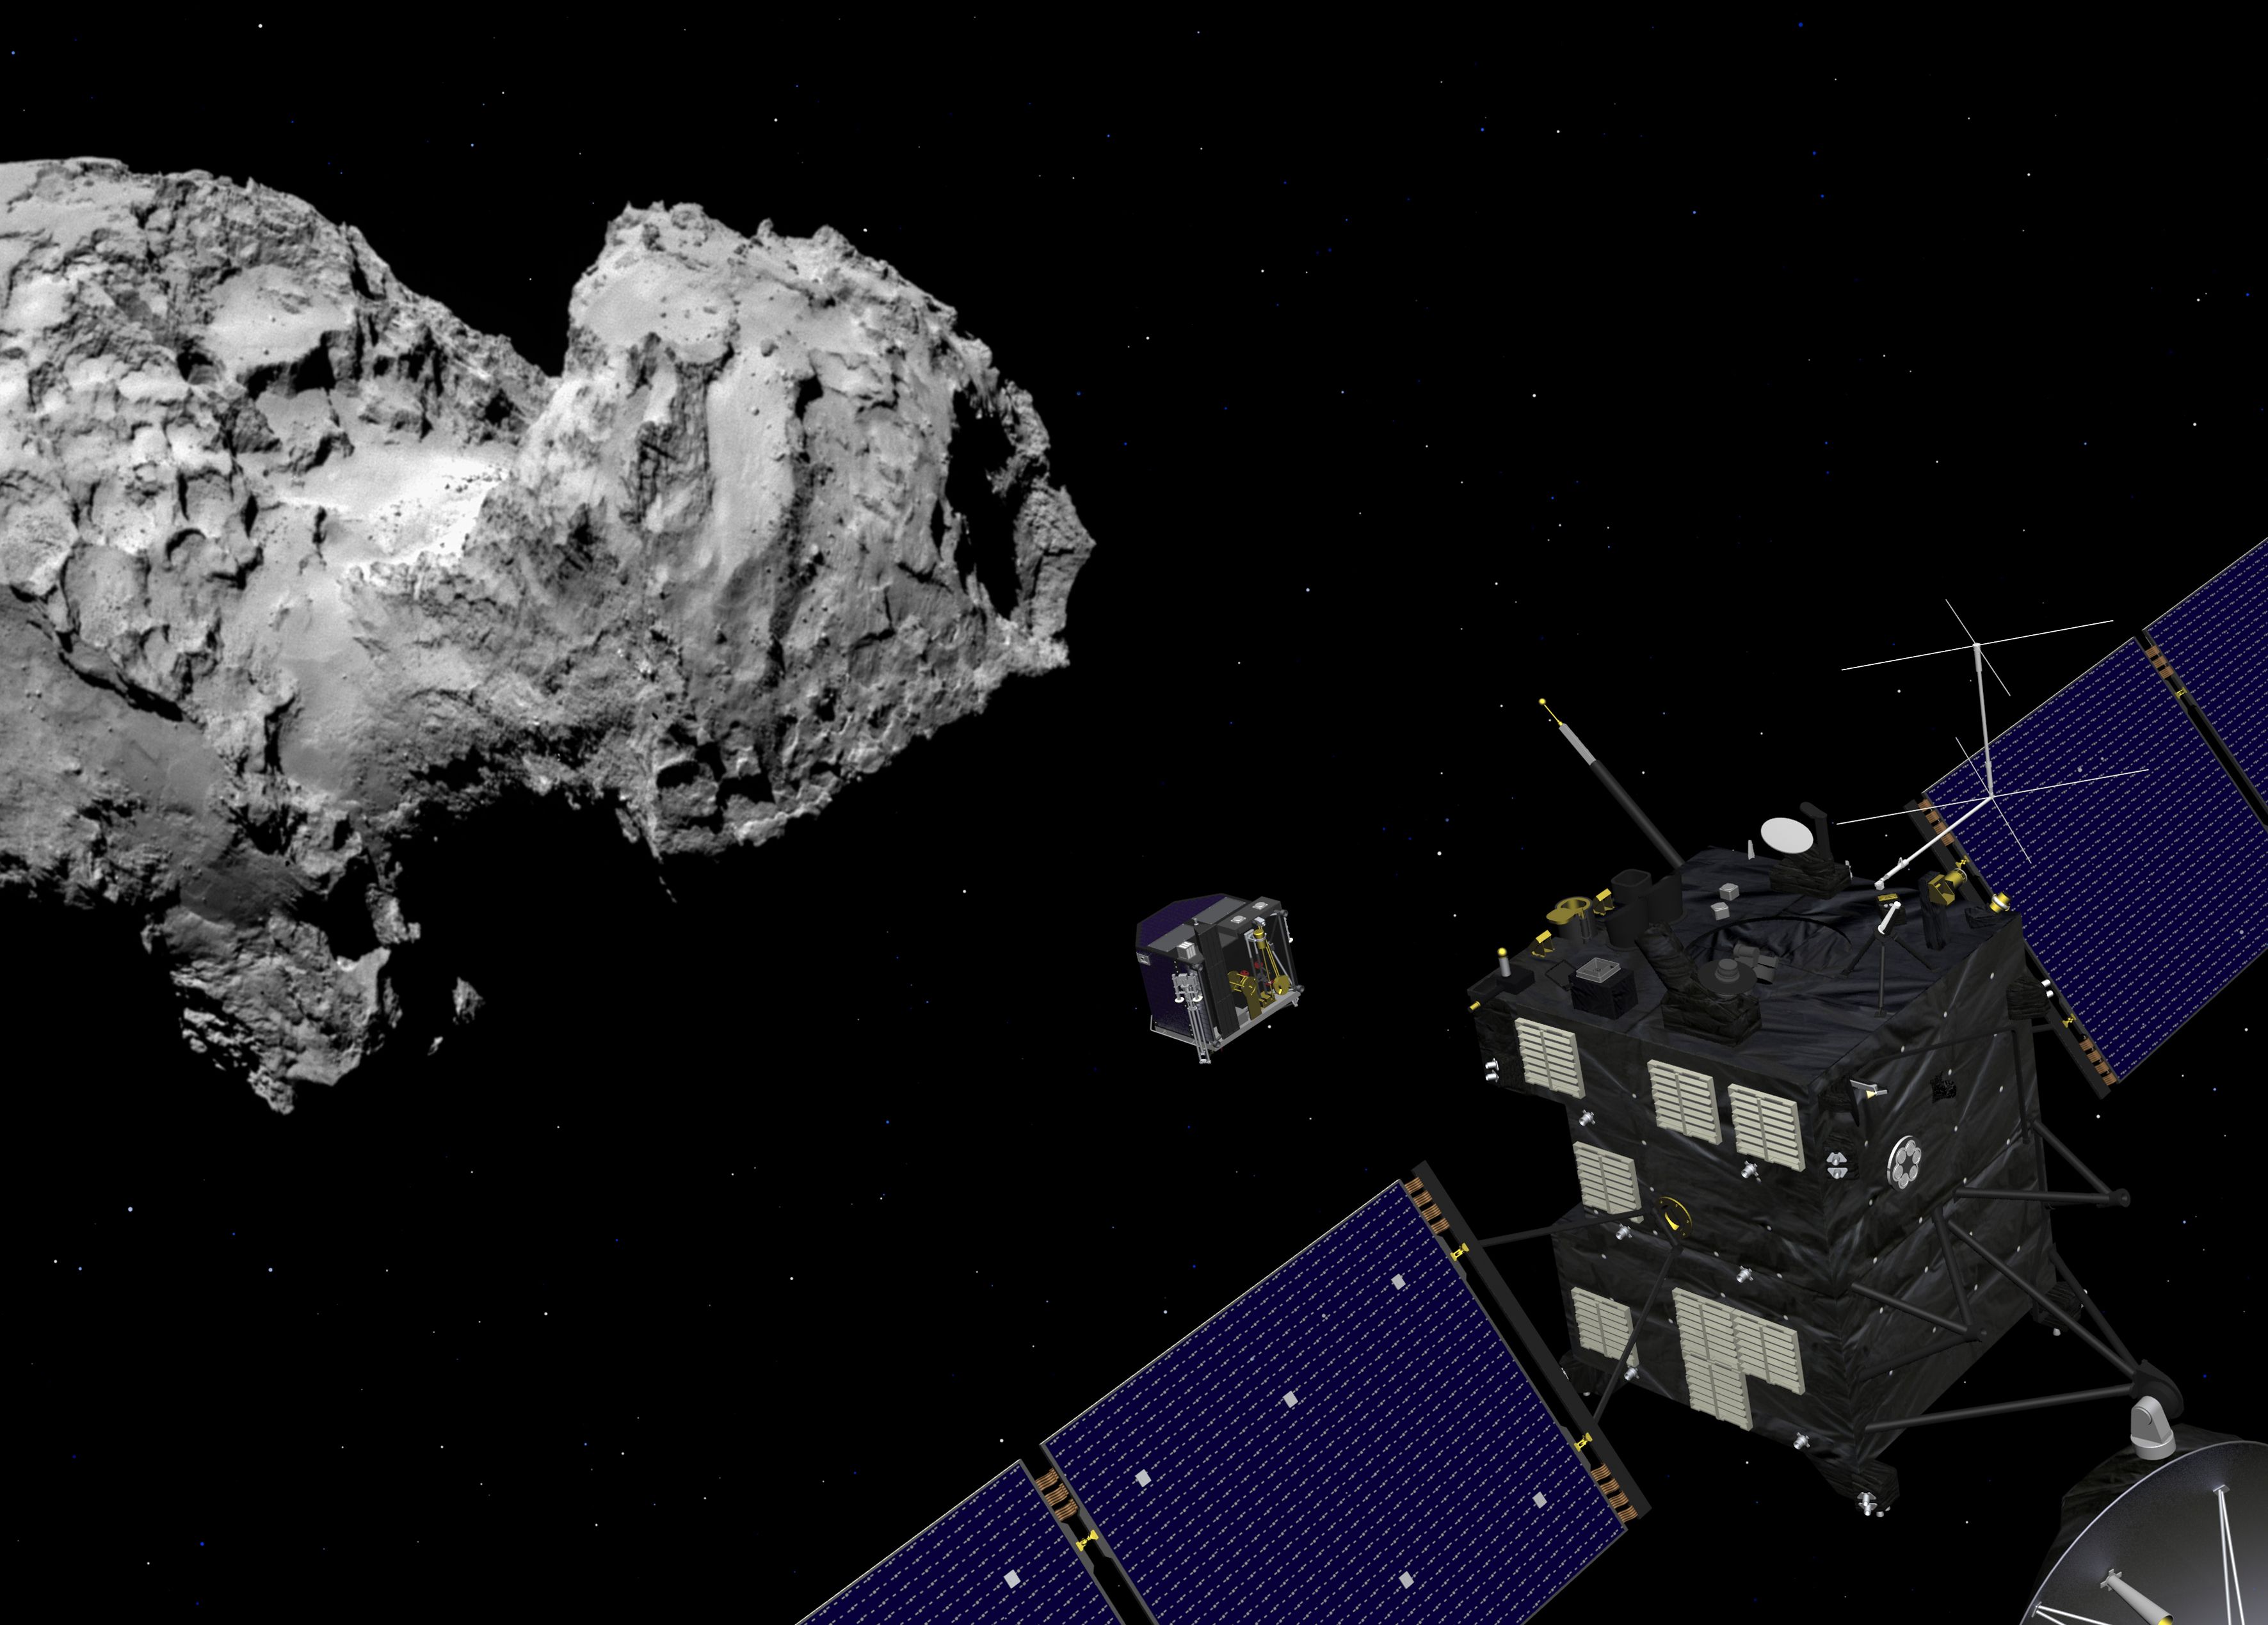 Rosetta et Philae proche de la comète (Crédits : Spacecraft: ESA–J. Huart, 2014; Comet image: ESA/Rosetta/MPS for OSIRIS Team MPS/UPD/LAM/IAA/SSO/INTA/UPM/DASP/IDA)